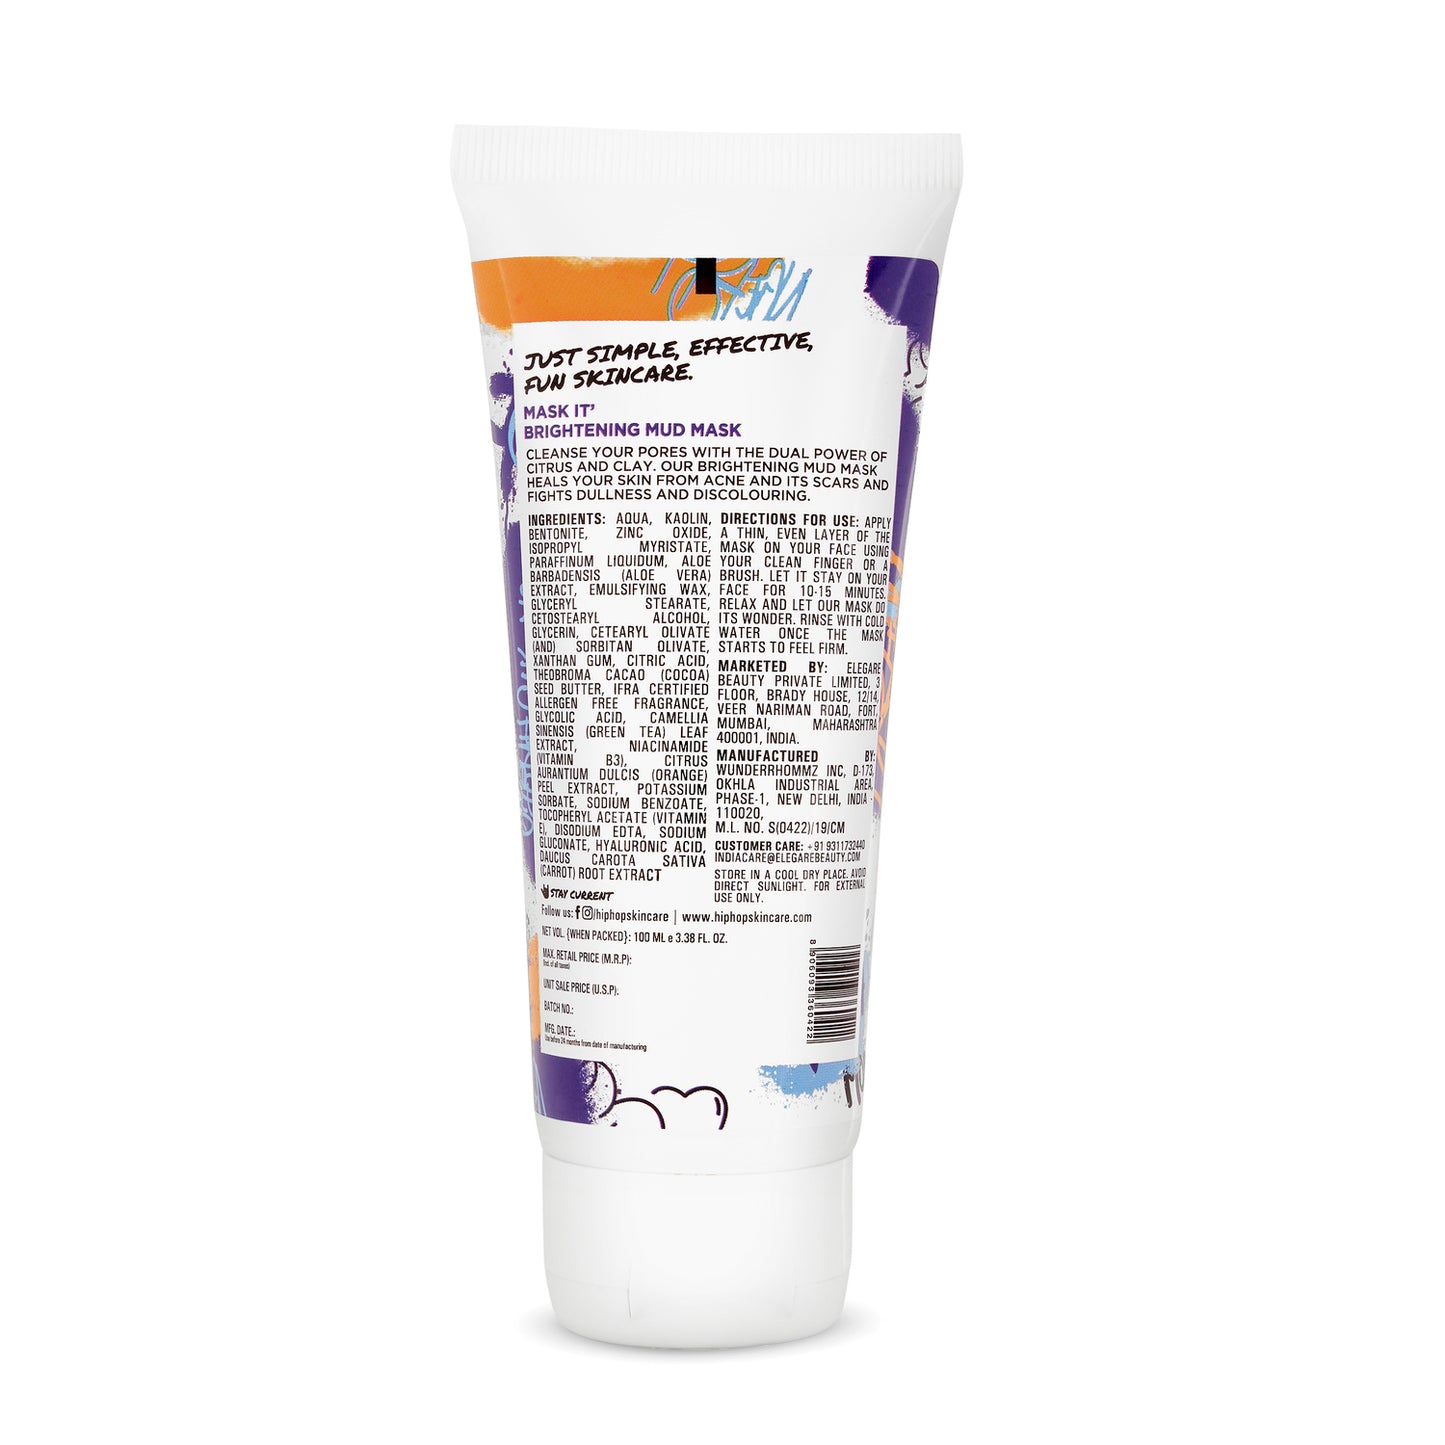 HipHop Bikini & Underarm Wax Strips (Argan Oil, 12 Strips) + Brightening Mud/Face Mask (Orange Peel Extract, 100 ml)